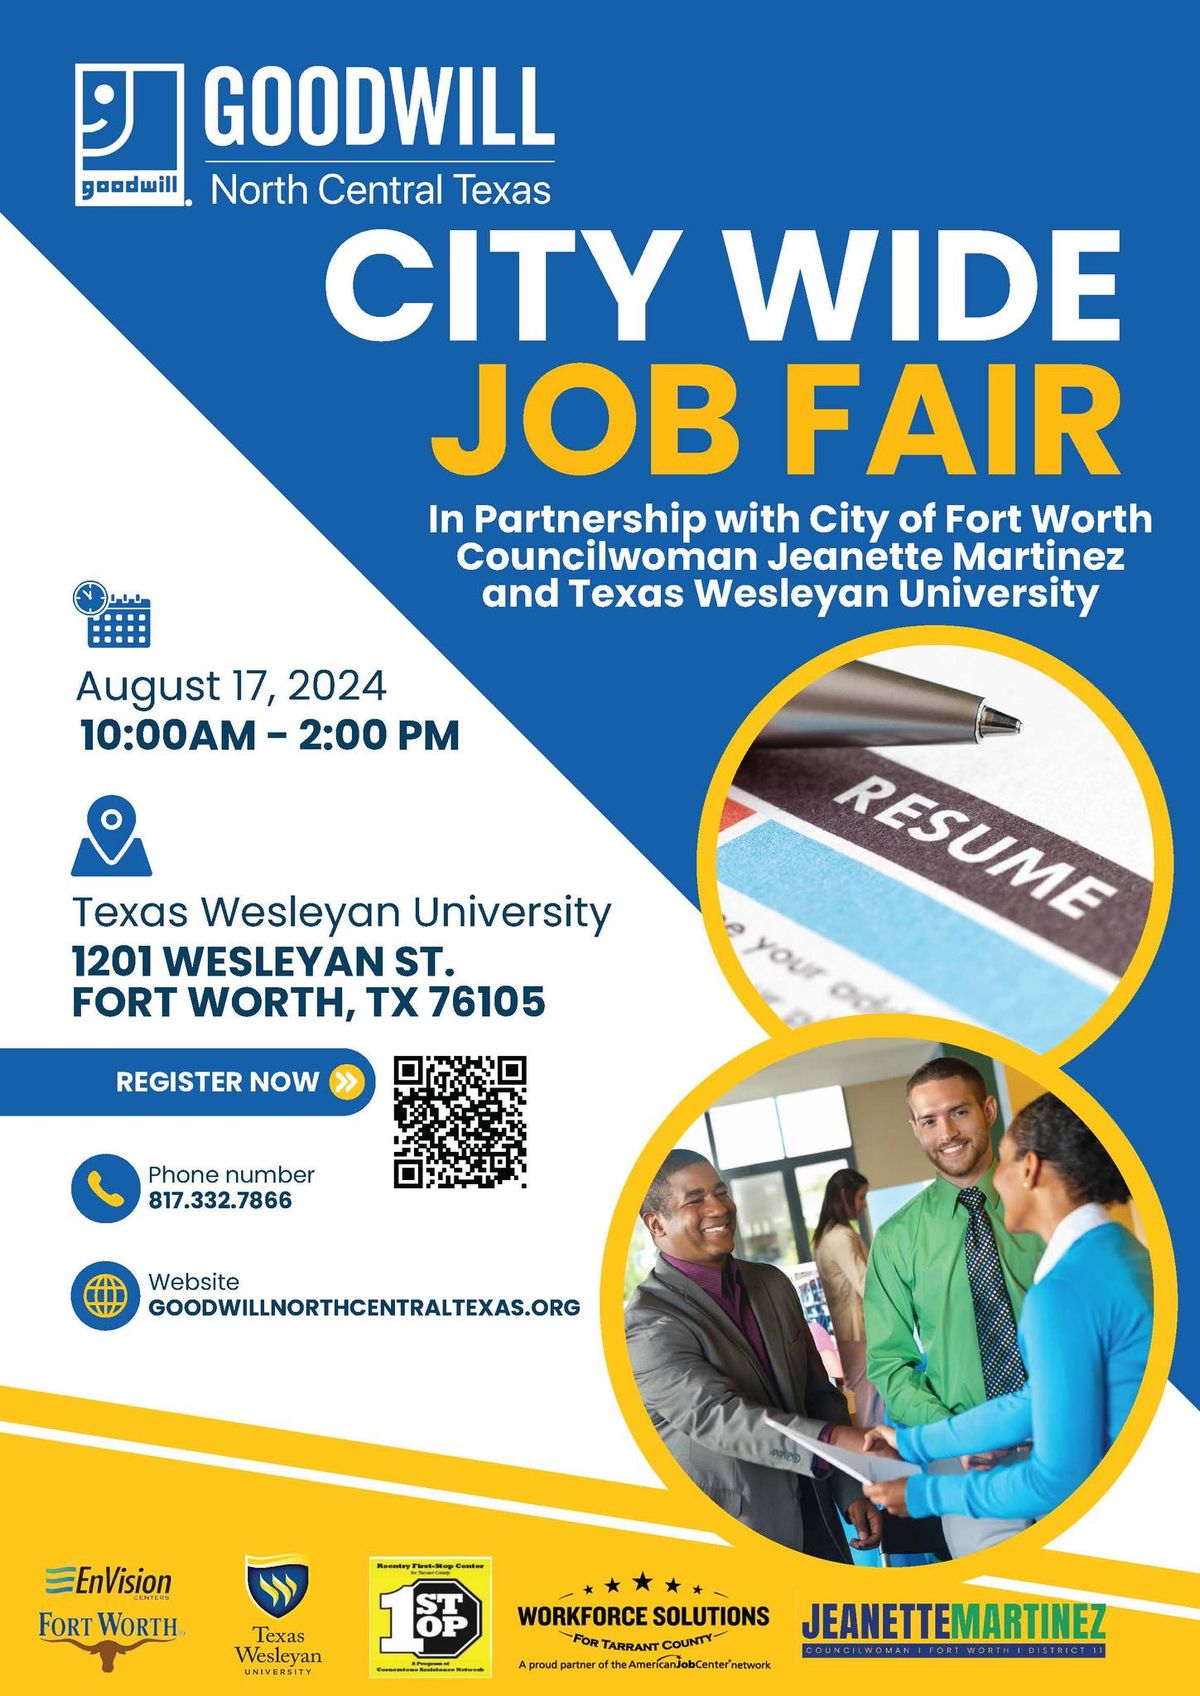 City Wide Job Fair at Texas Wesleyan University